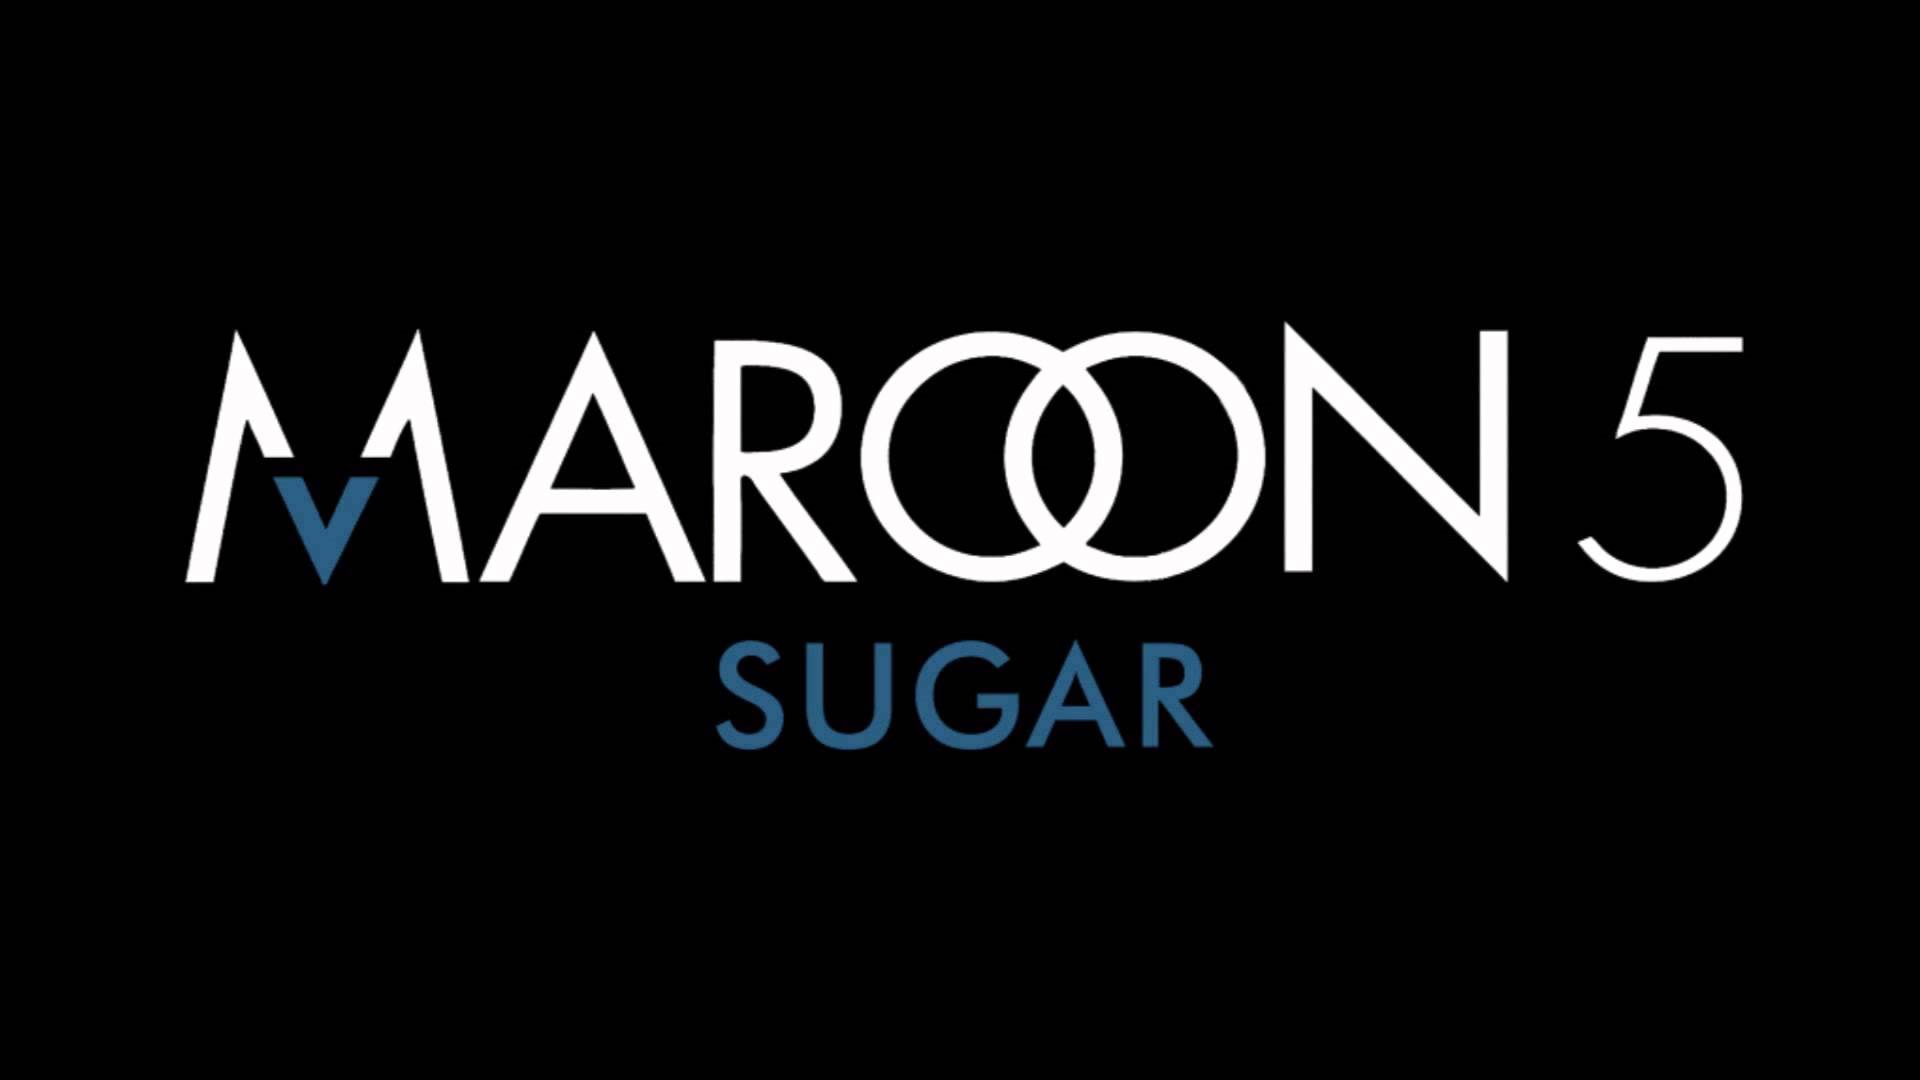 Maroon 5 wallpaper